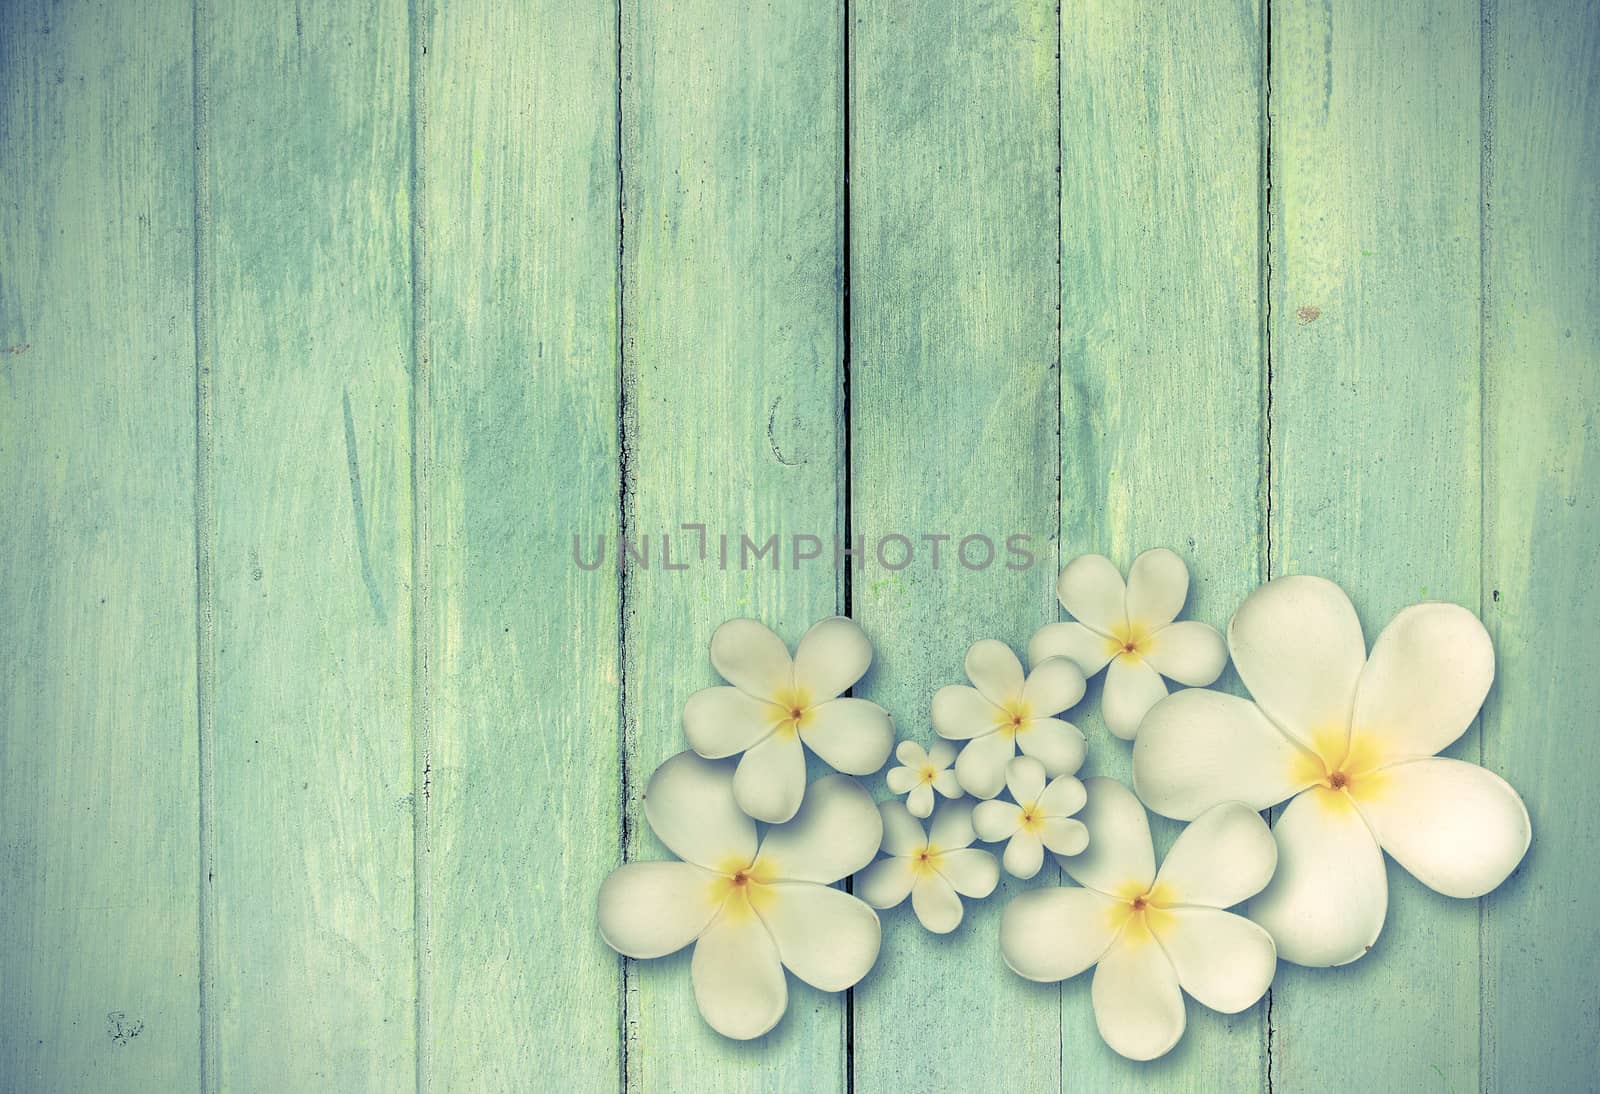 vintage effect style of White plumeria flower on wood background